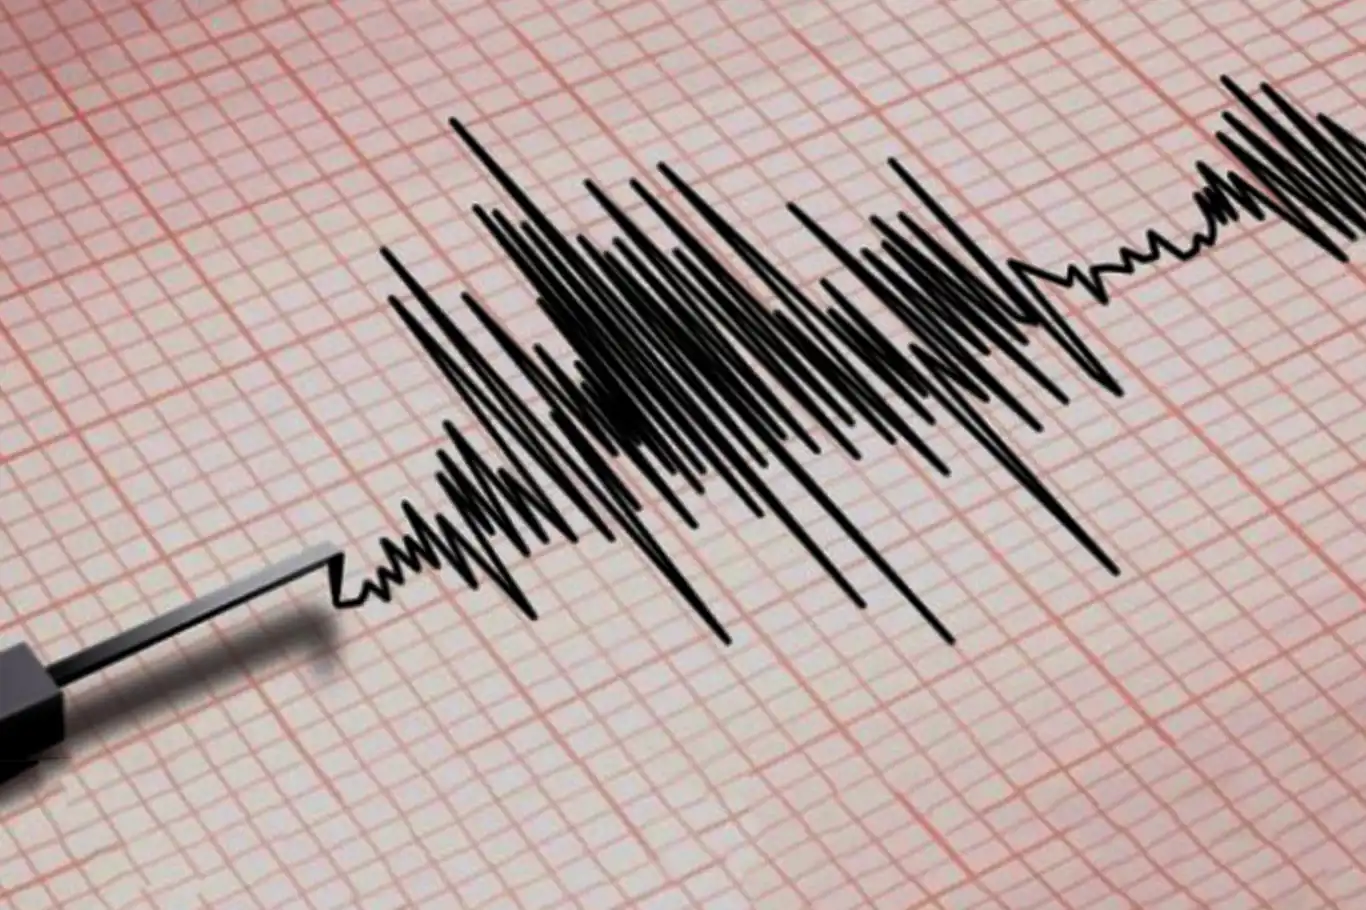 Earthquake with magnitude 5.6 rattles Azerbaijan